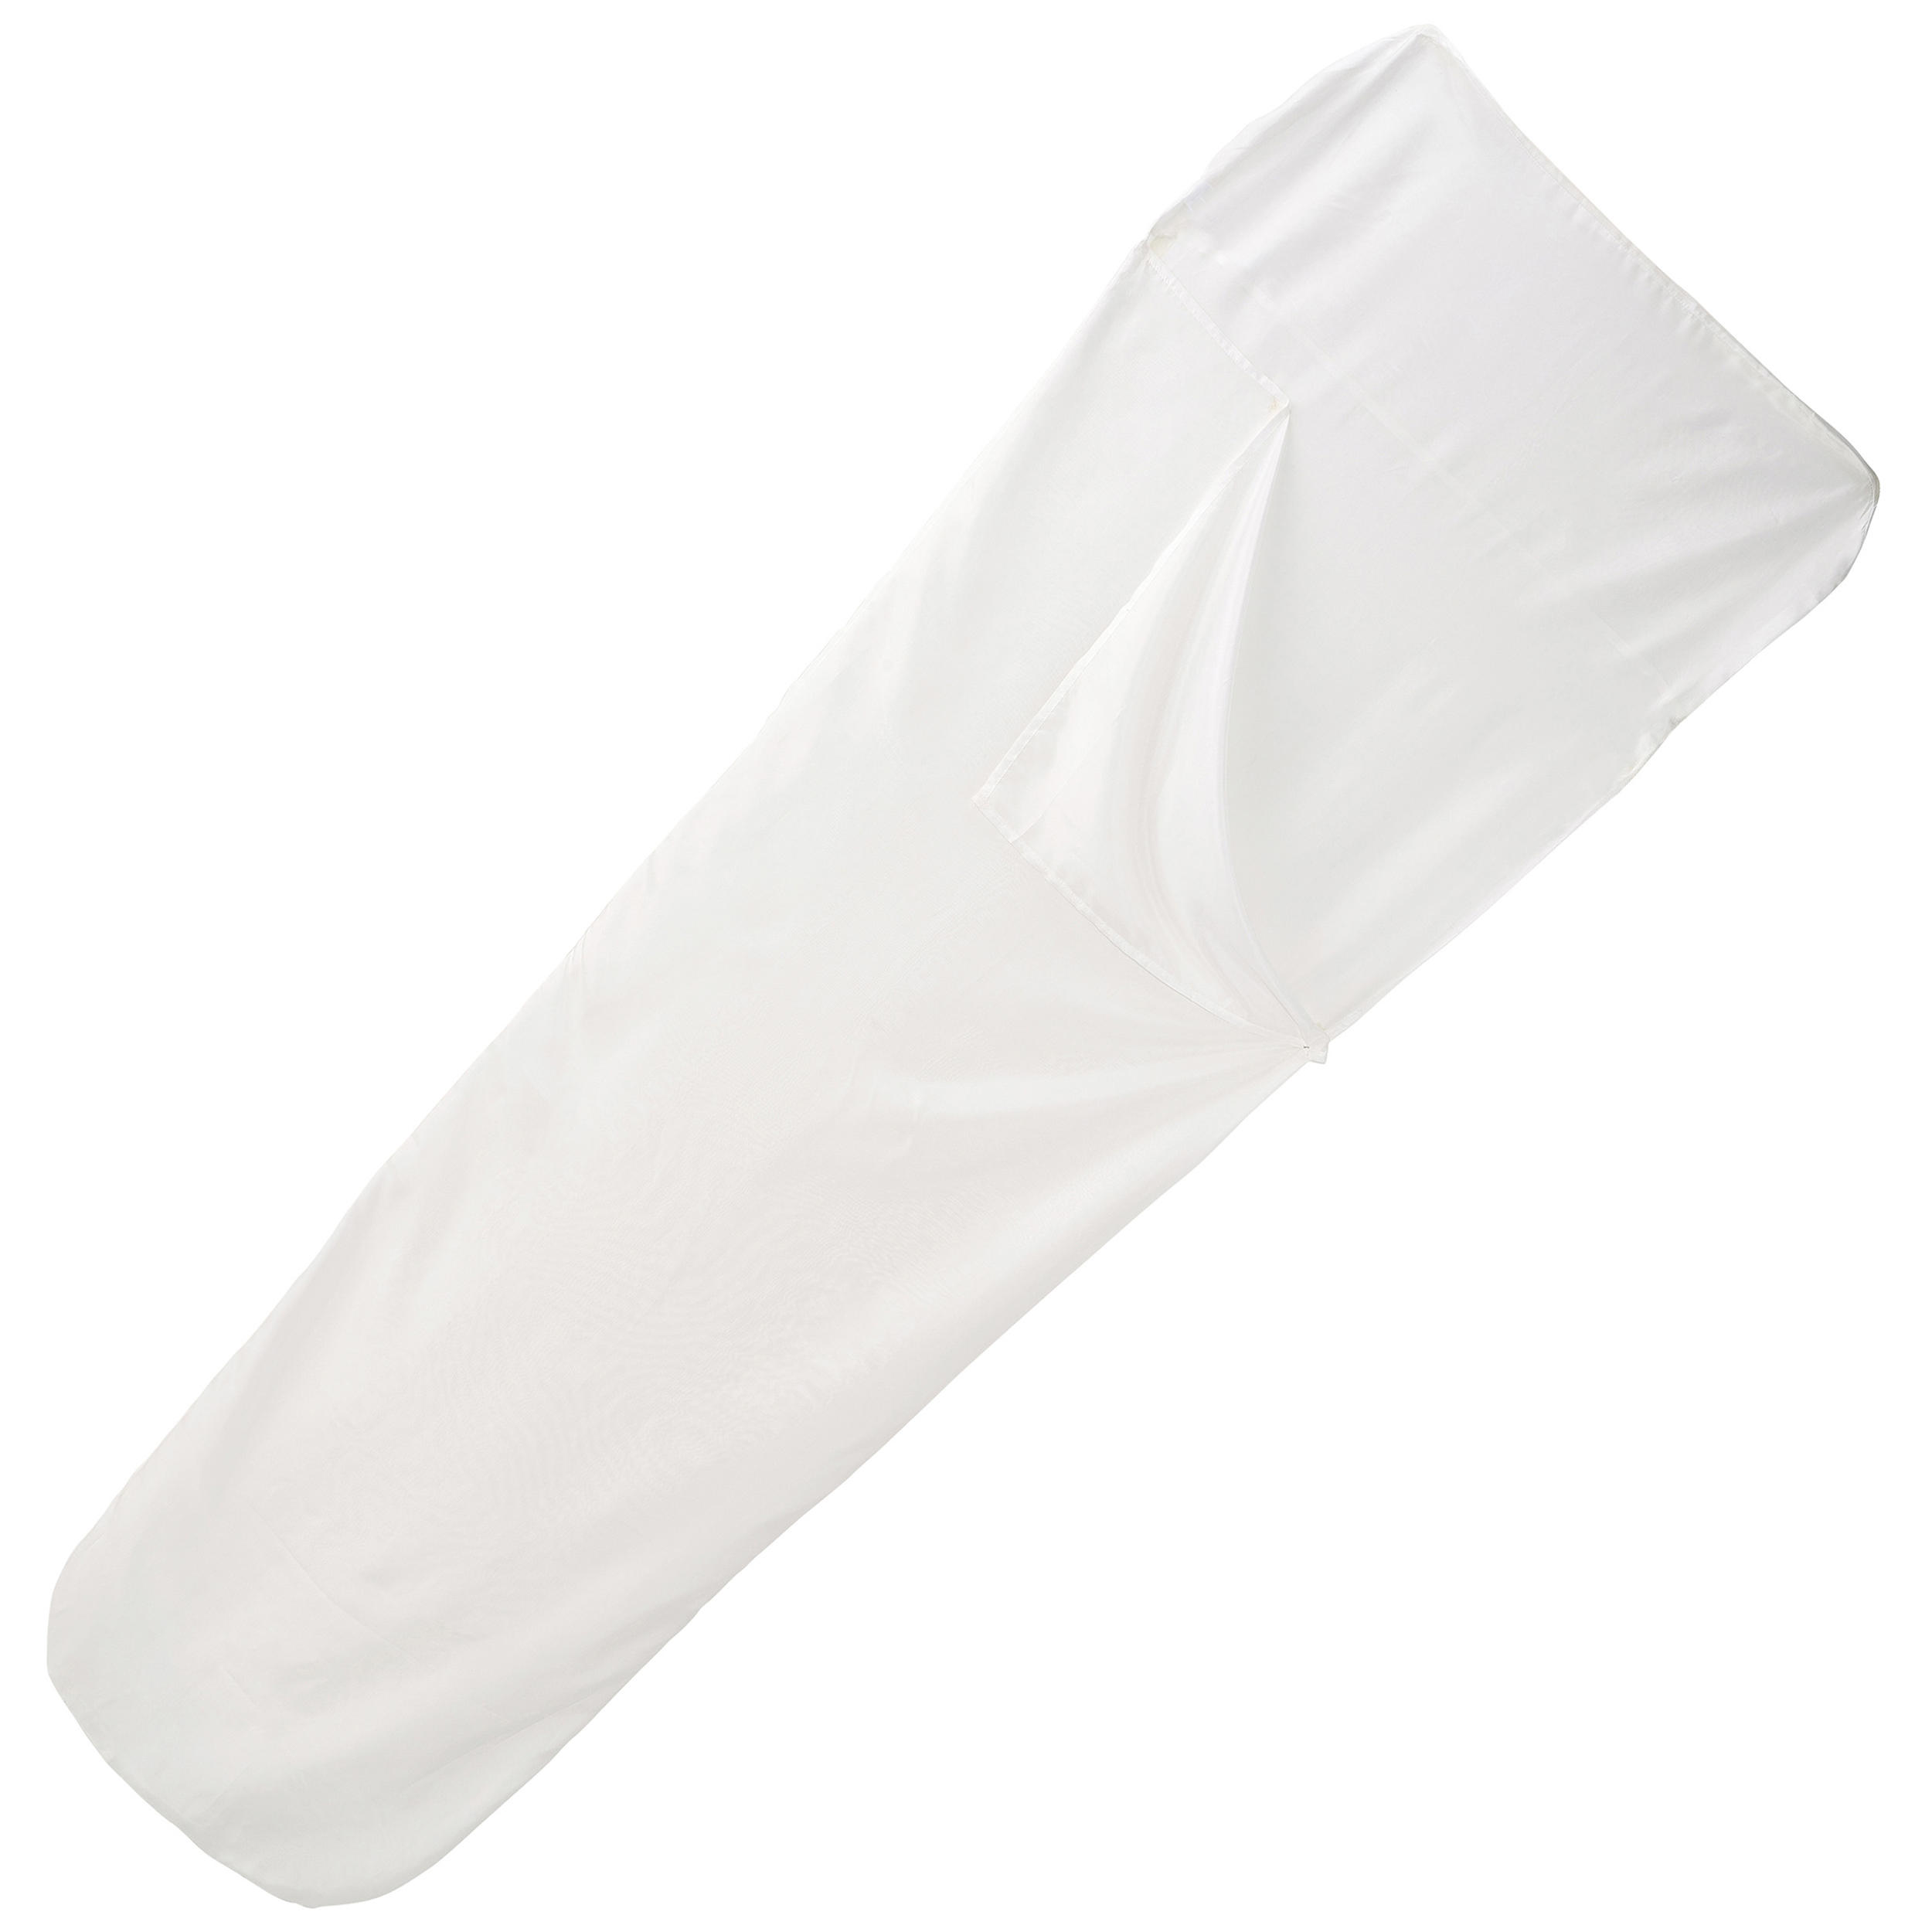 decathlon silk sleeping bag liner